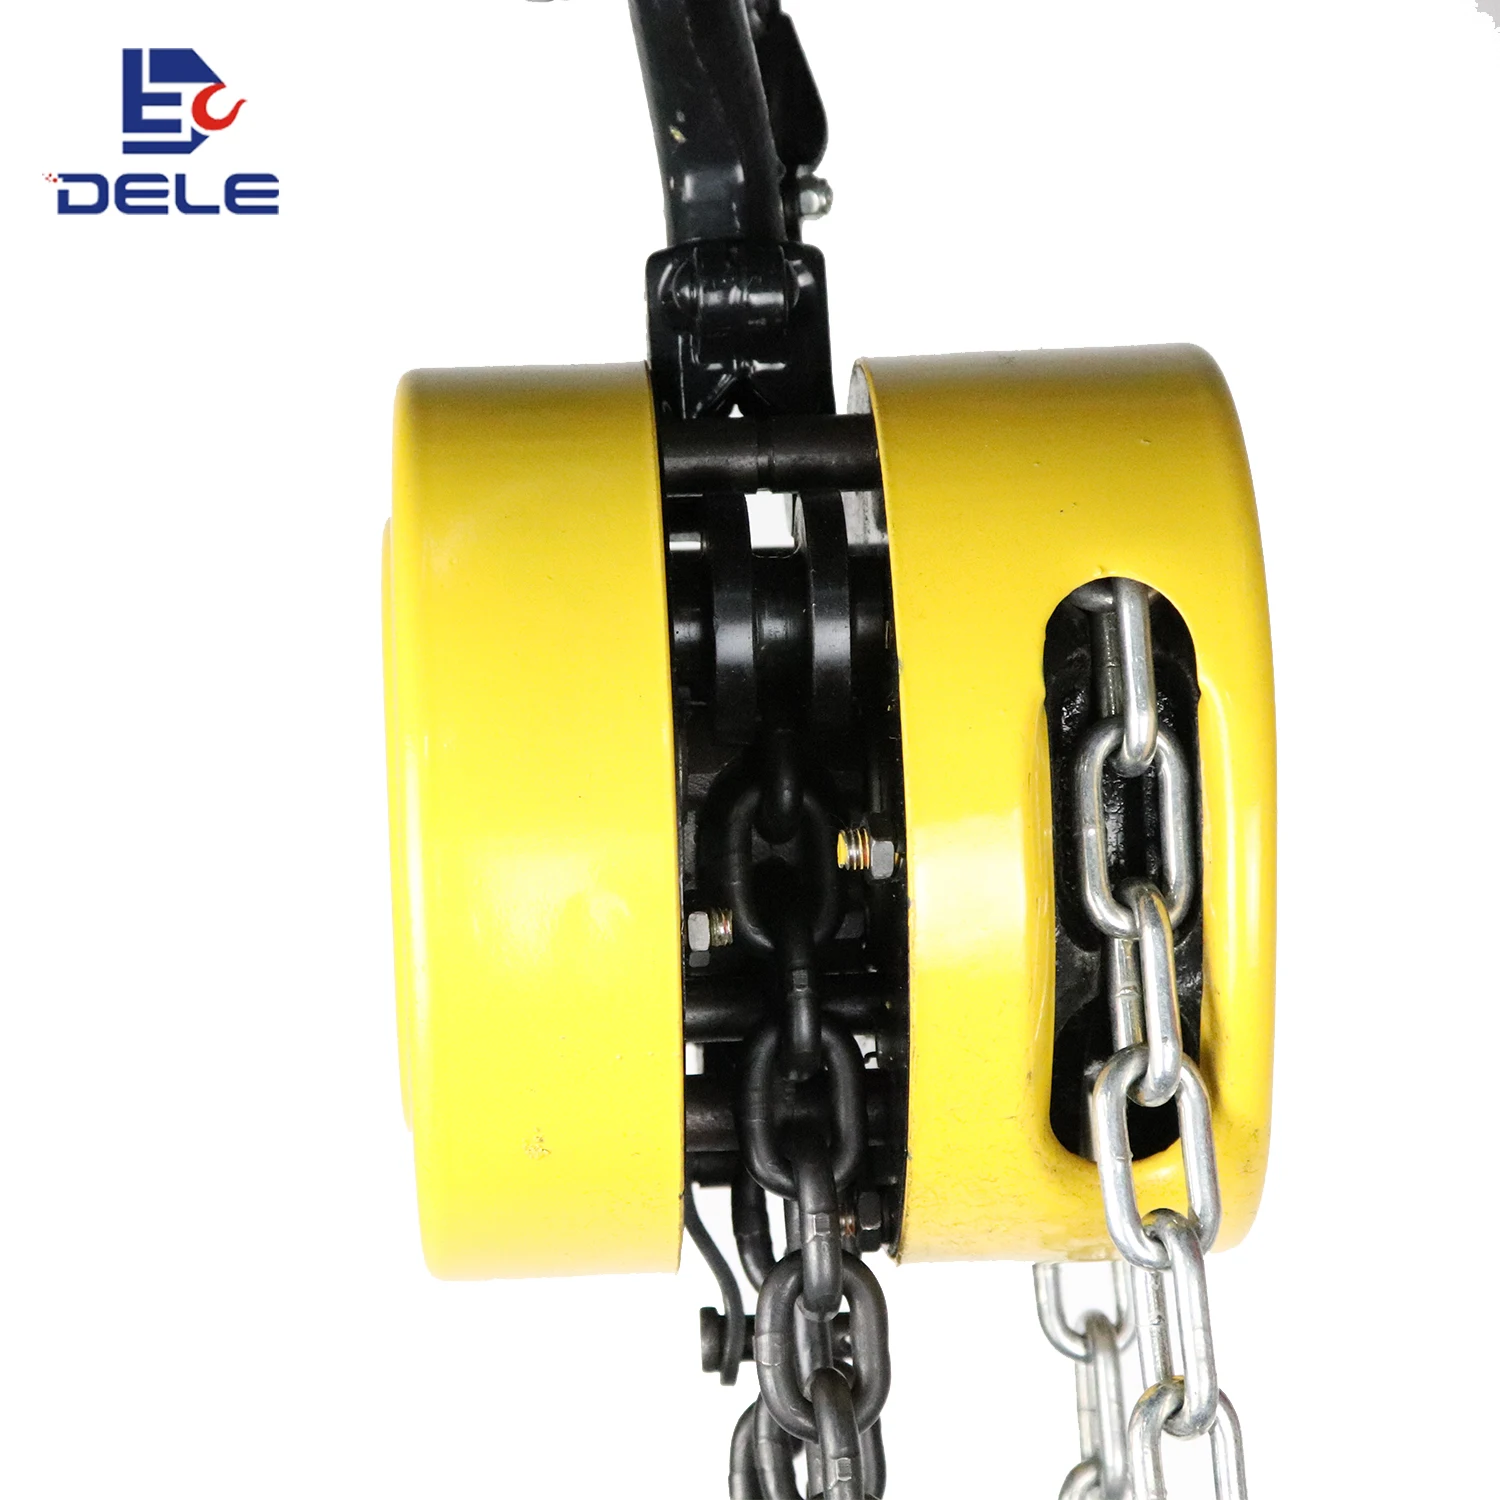 
China Hangzhou DELE 5T Portable Manual Chain Hoist  (1600180223567)